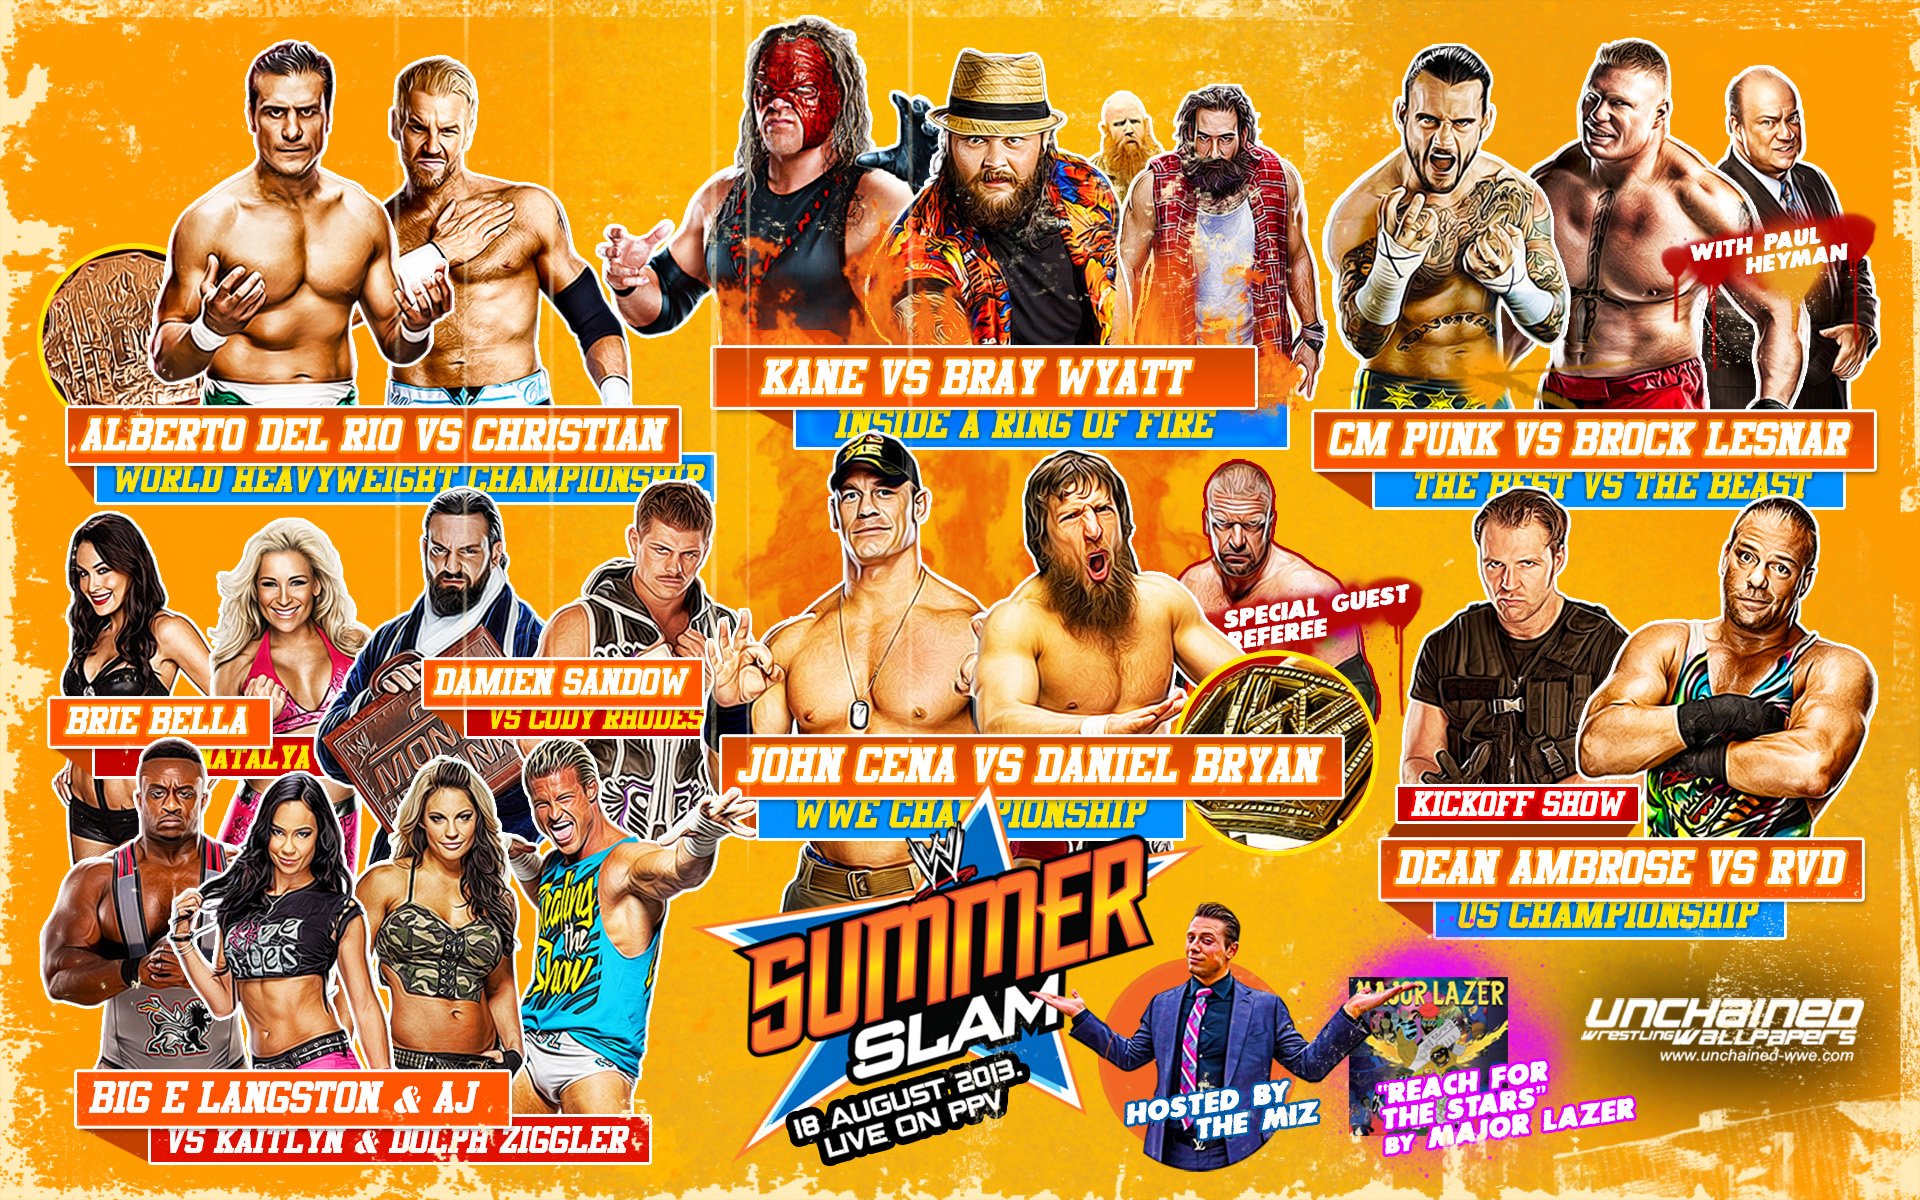 Nikki Bella Xxx With John Cena - Chairshot Classics: WWE SummerSlam 2013 | Page 4 | The Chairshot